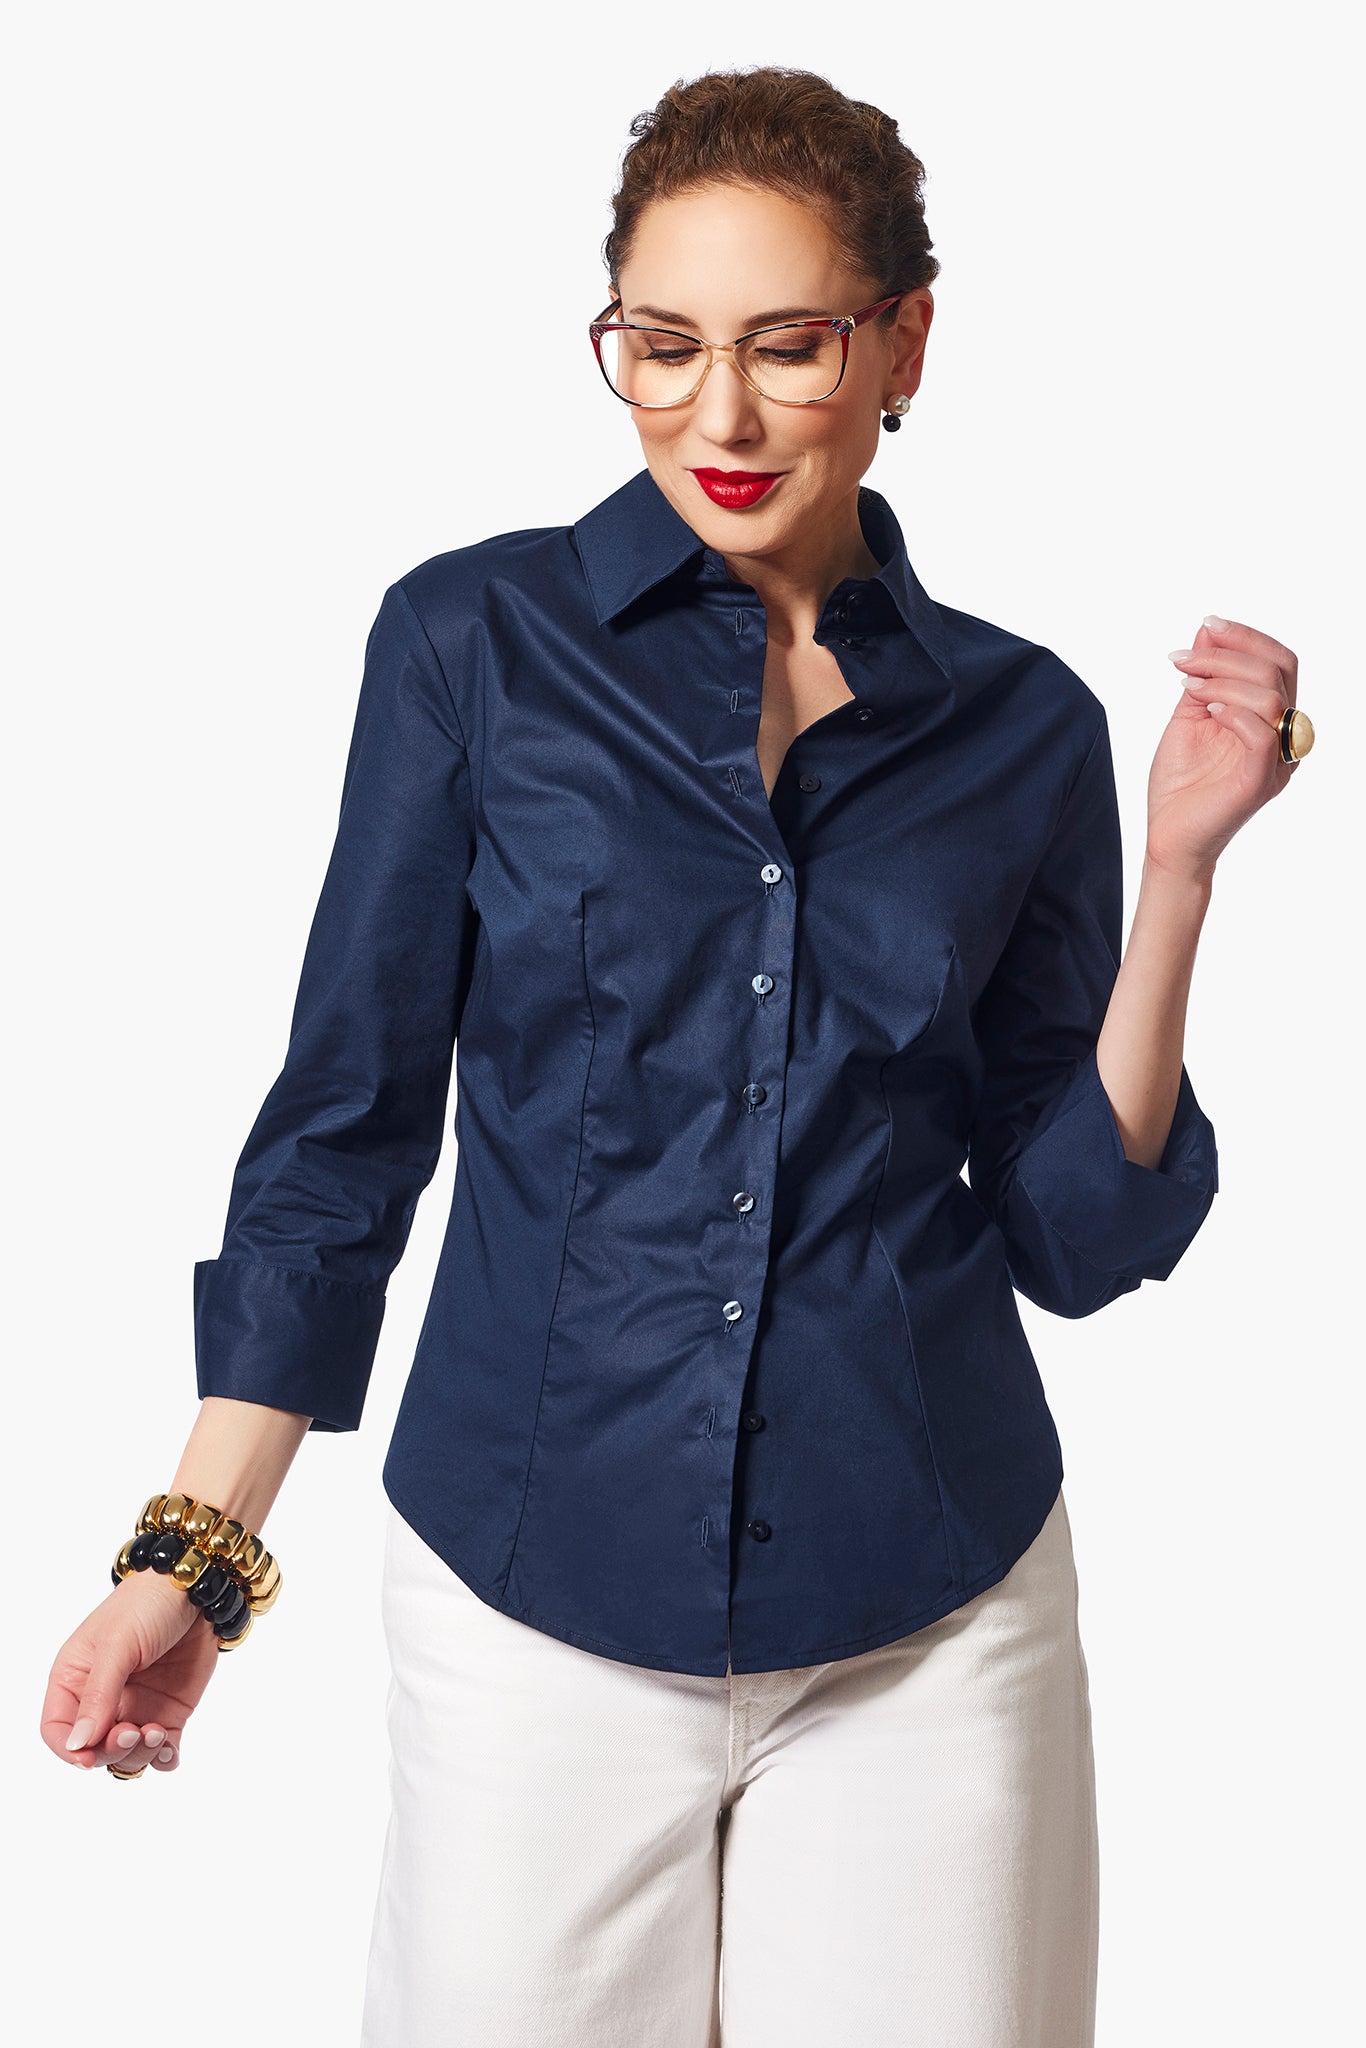 The Day-to-Day Applique Shirt - Rockmore Vermillion | Carla